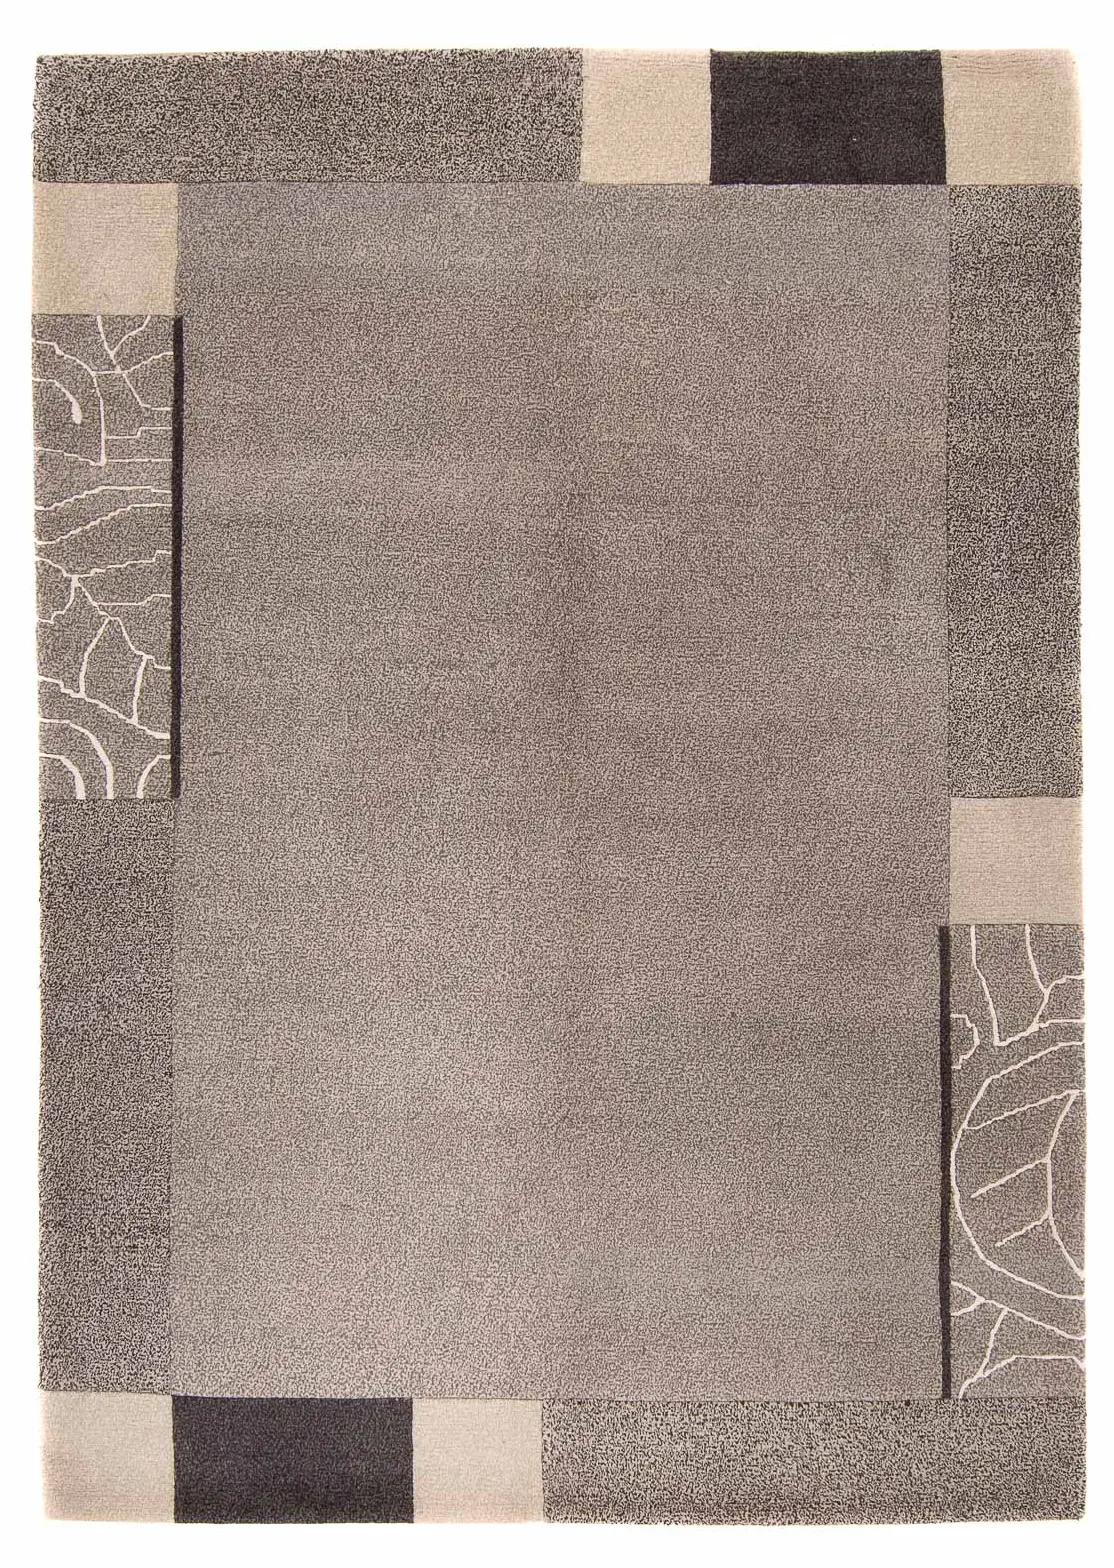 Nepal Teppich - 230 x - cm 160 grau